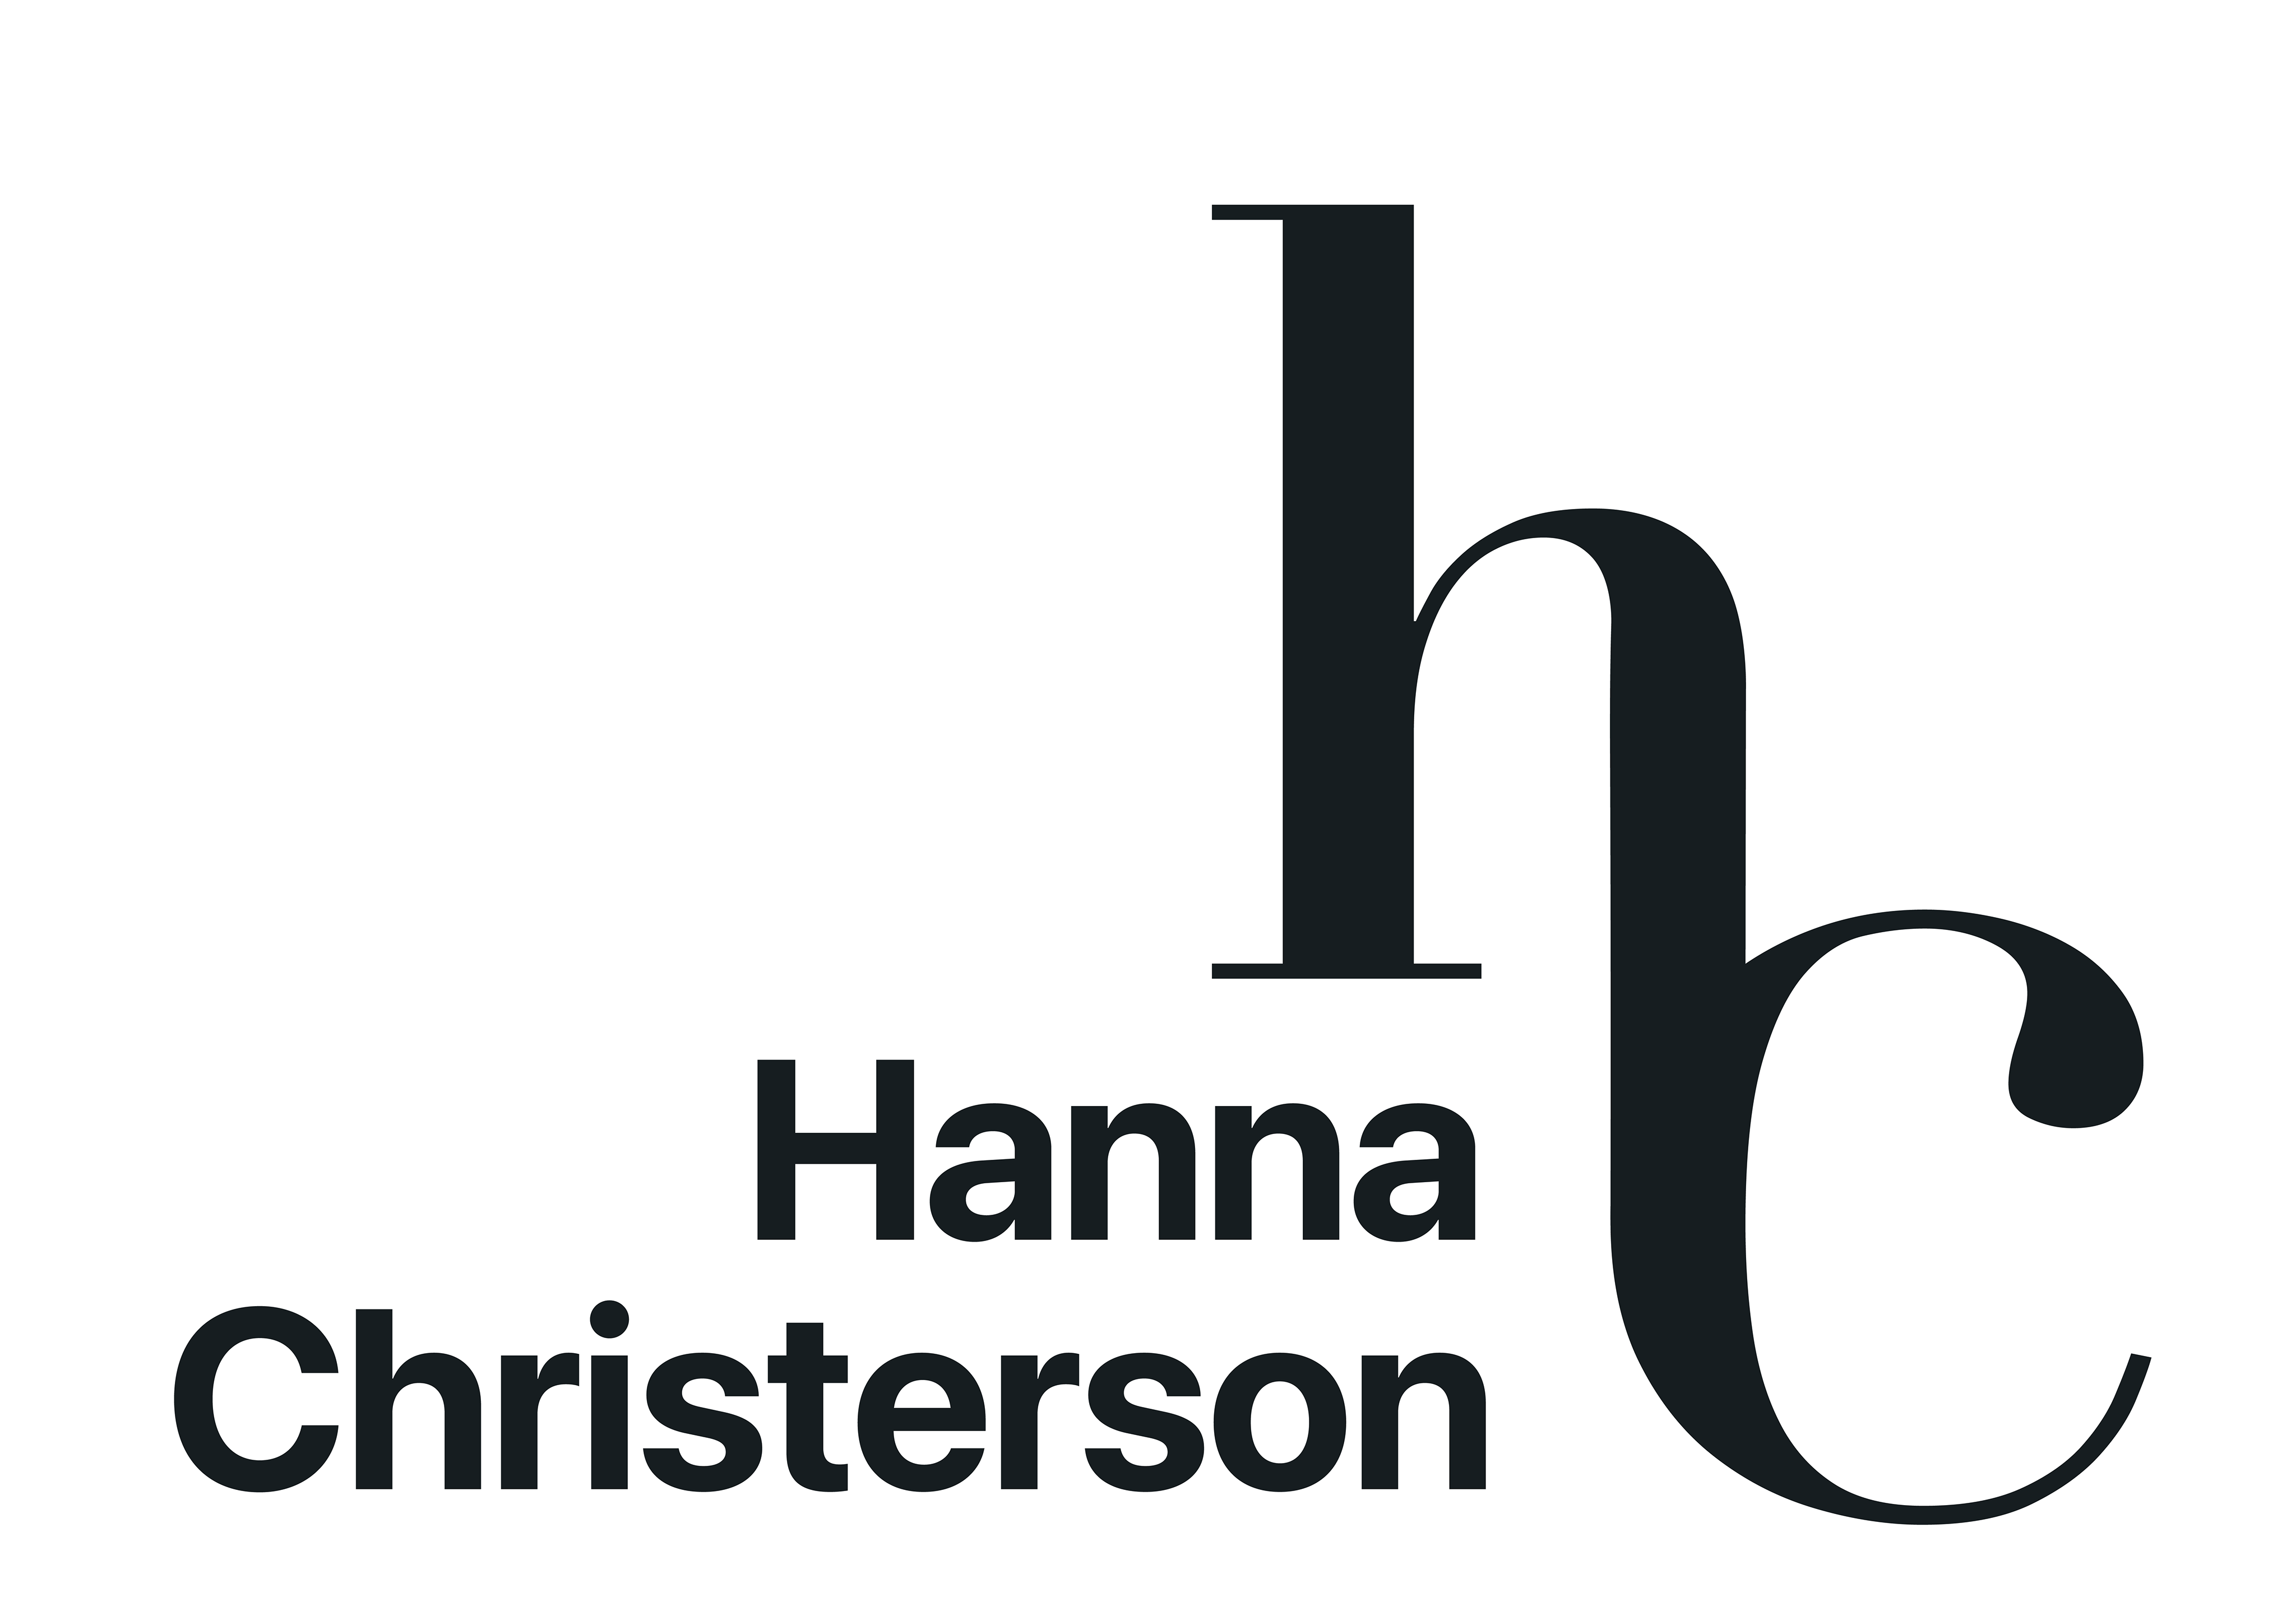 Hanna Christerson